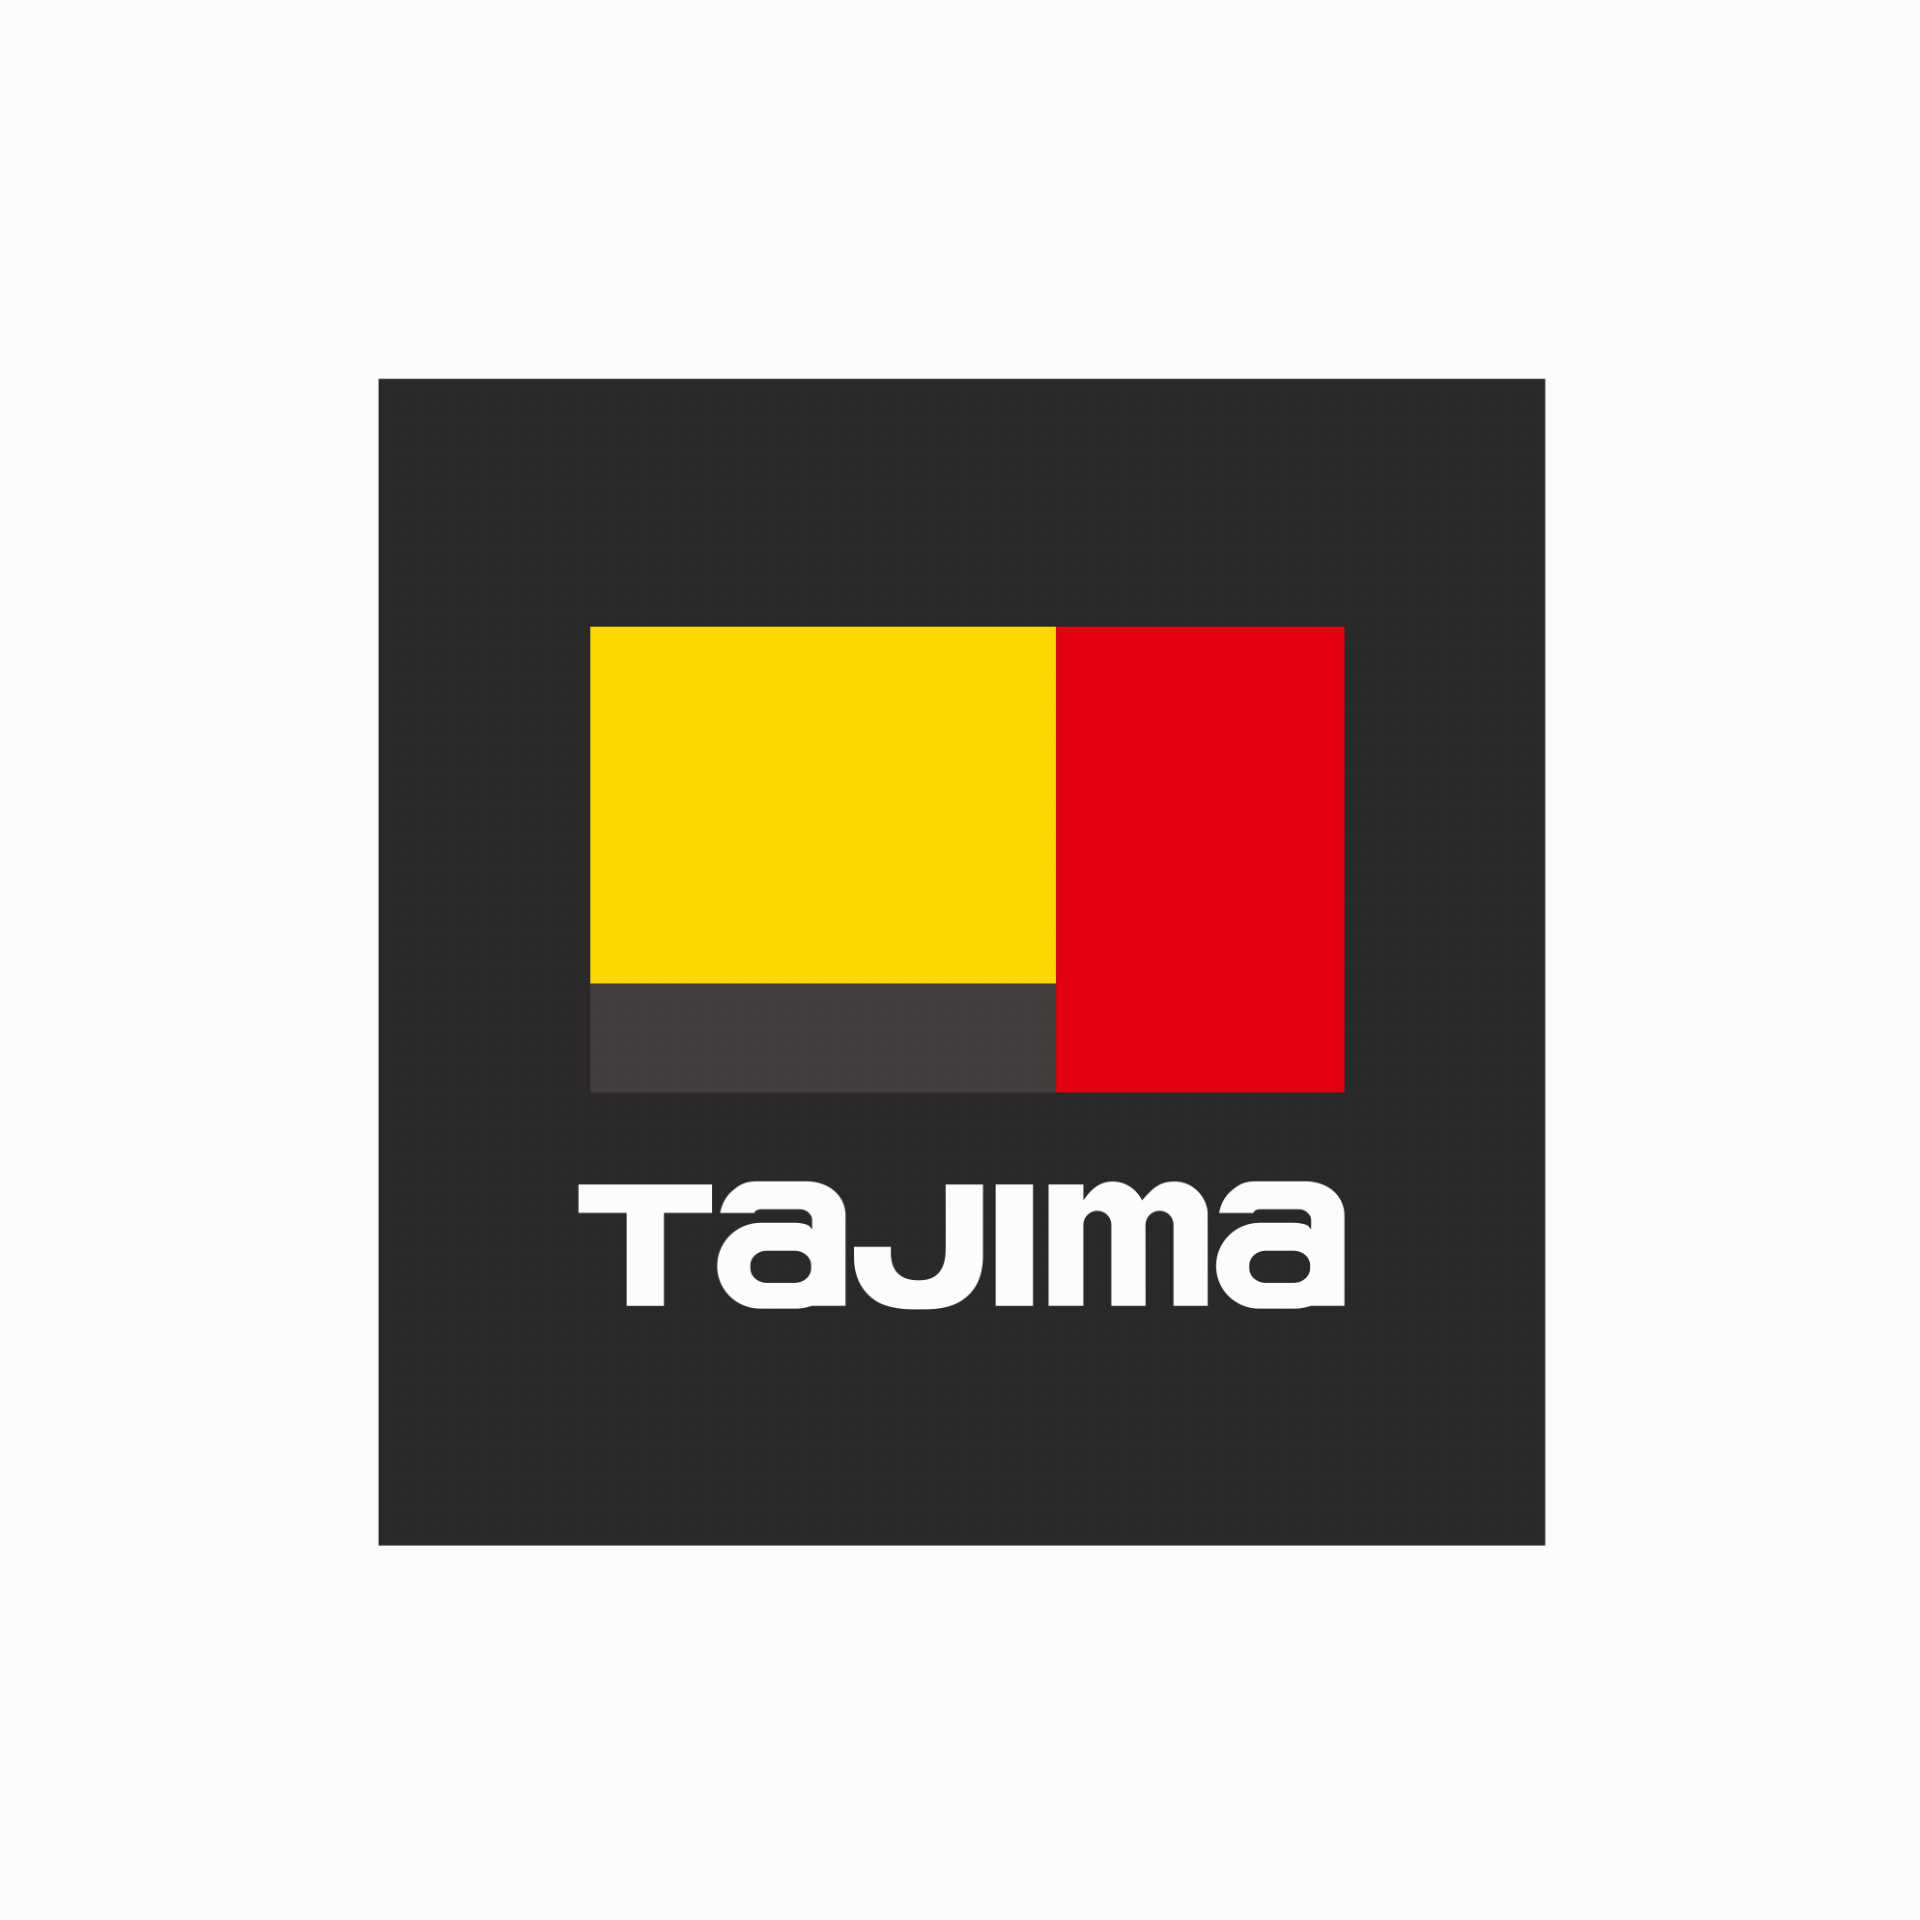 Logo TAJIMA TOOL